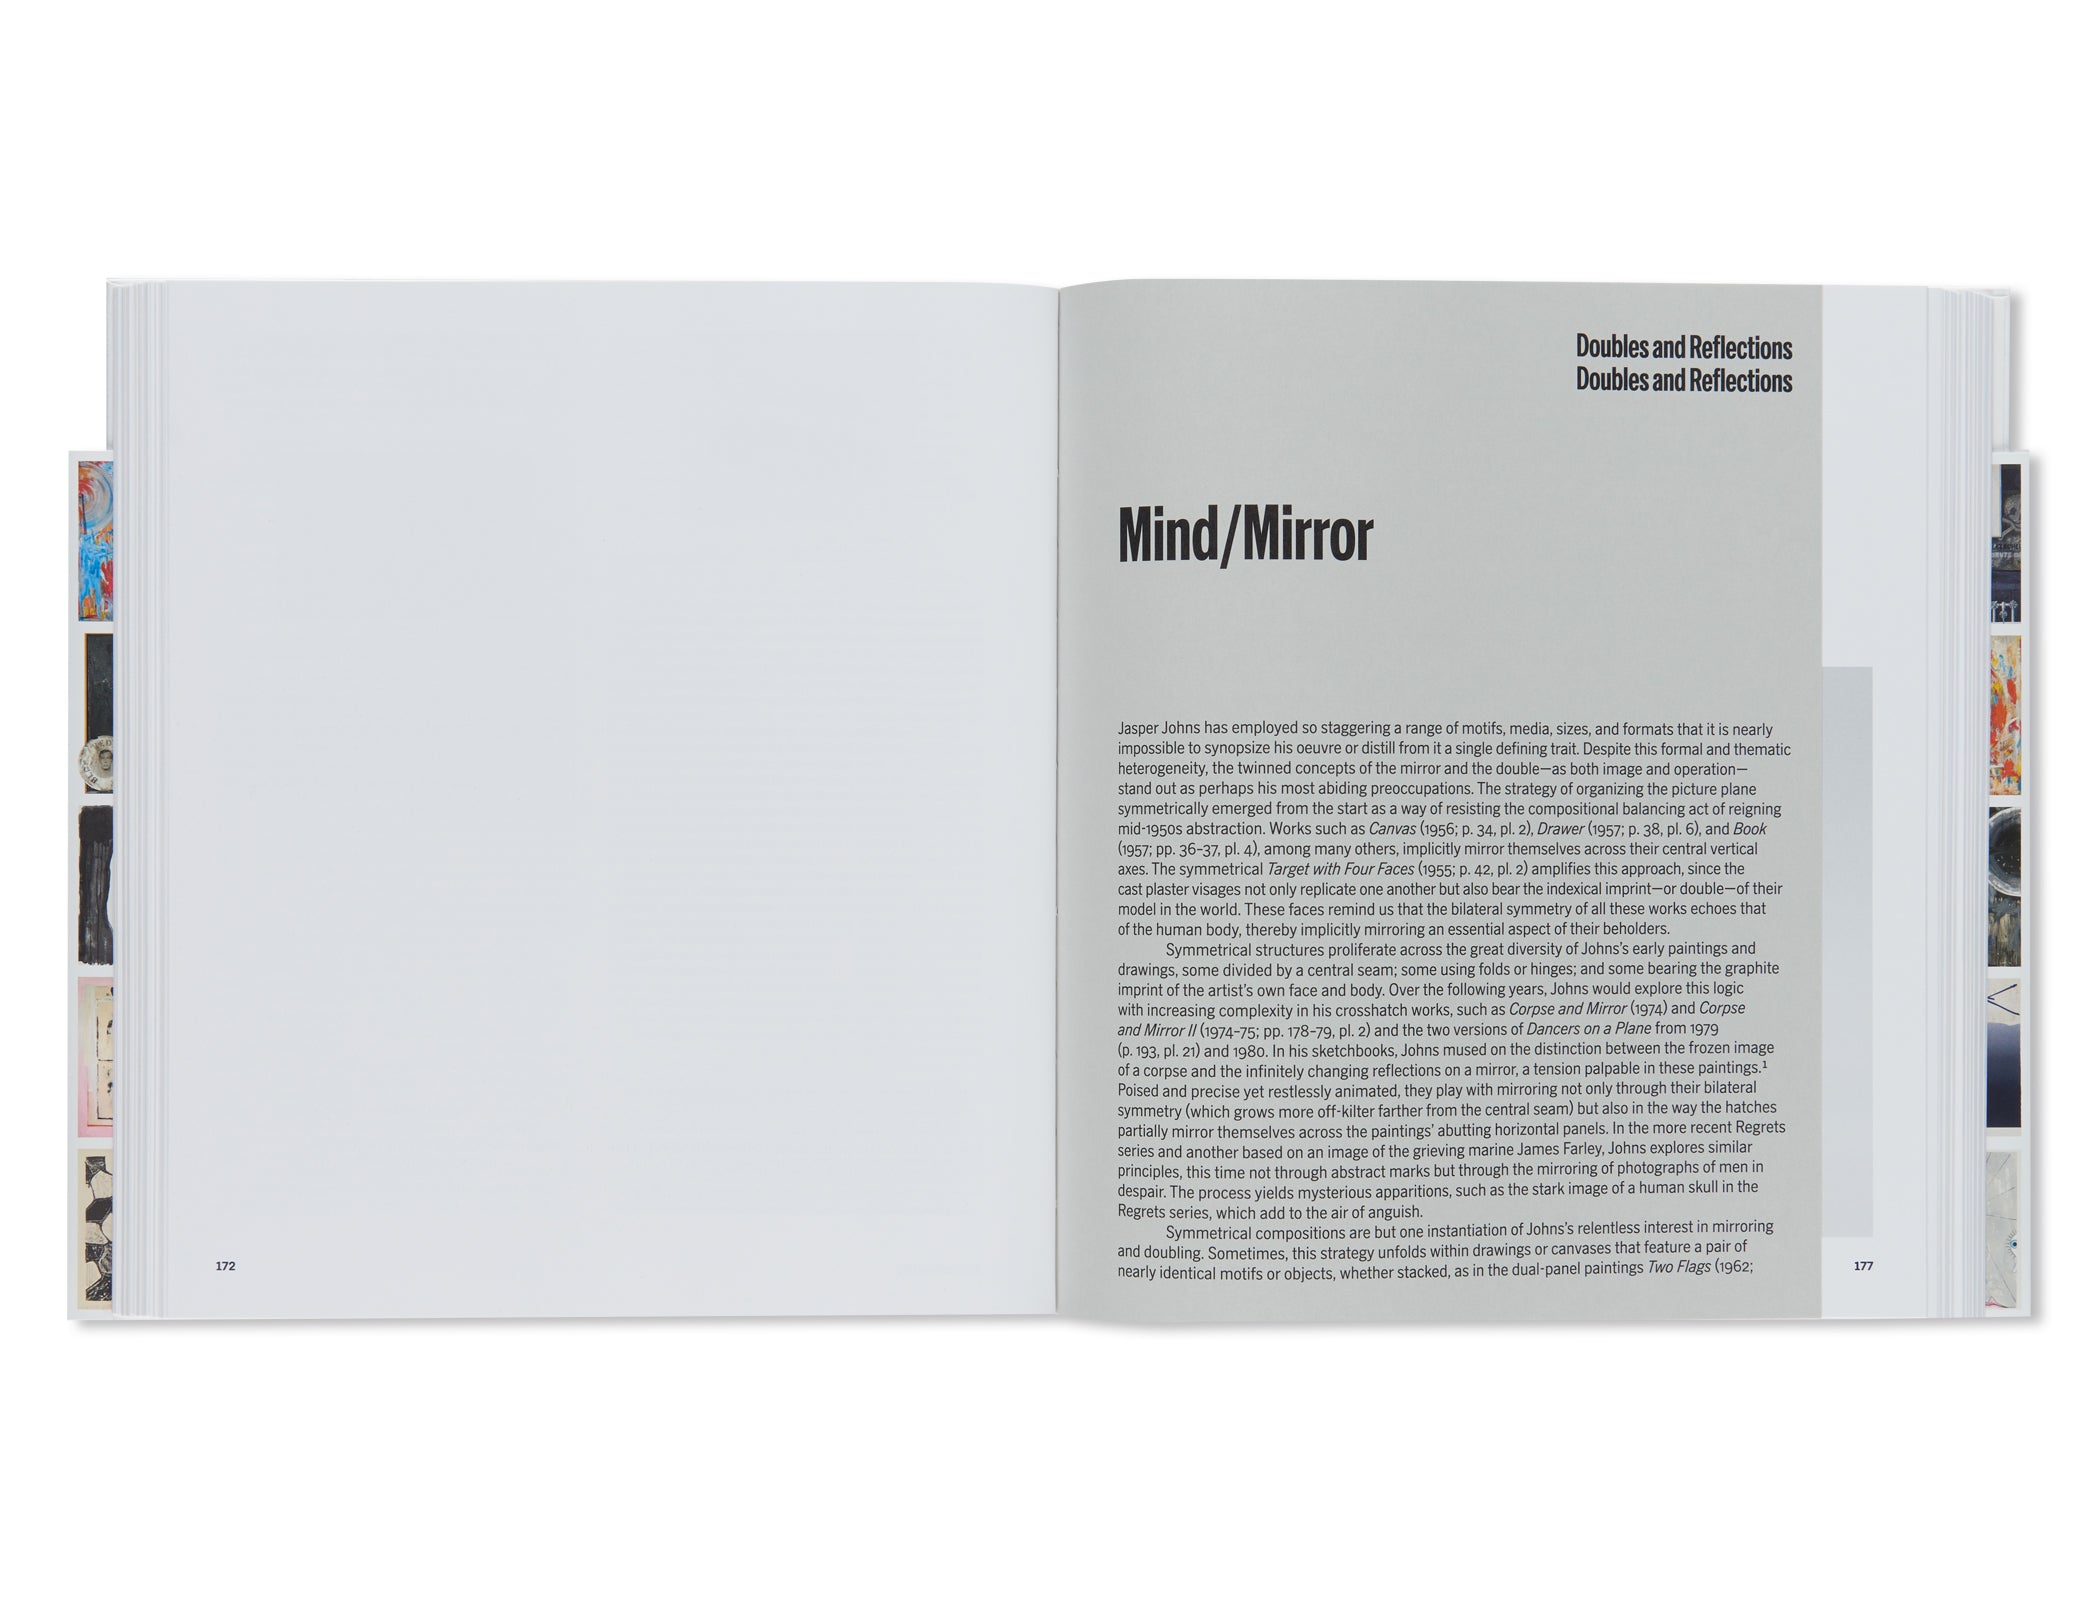 MIND/MIRROR by Jasper Johns